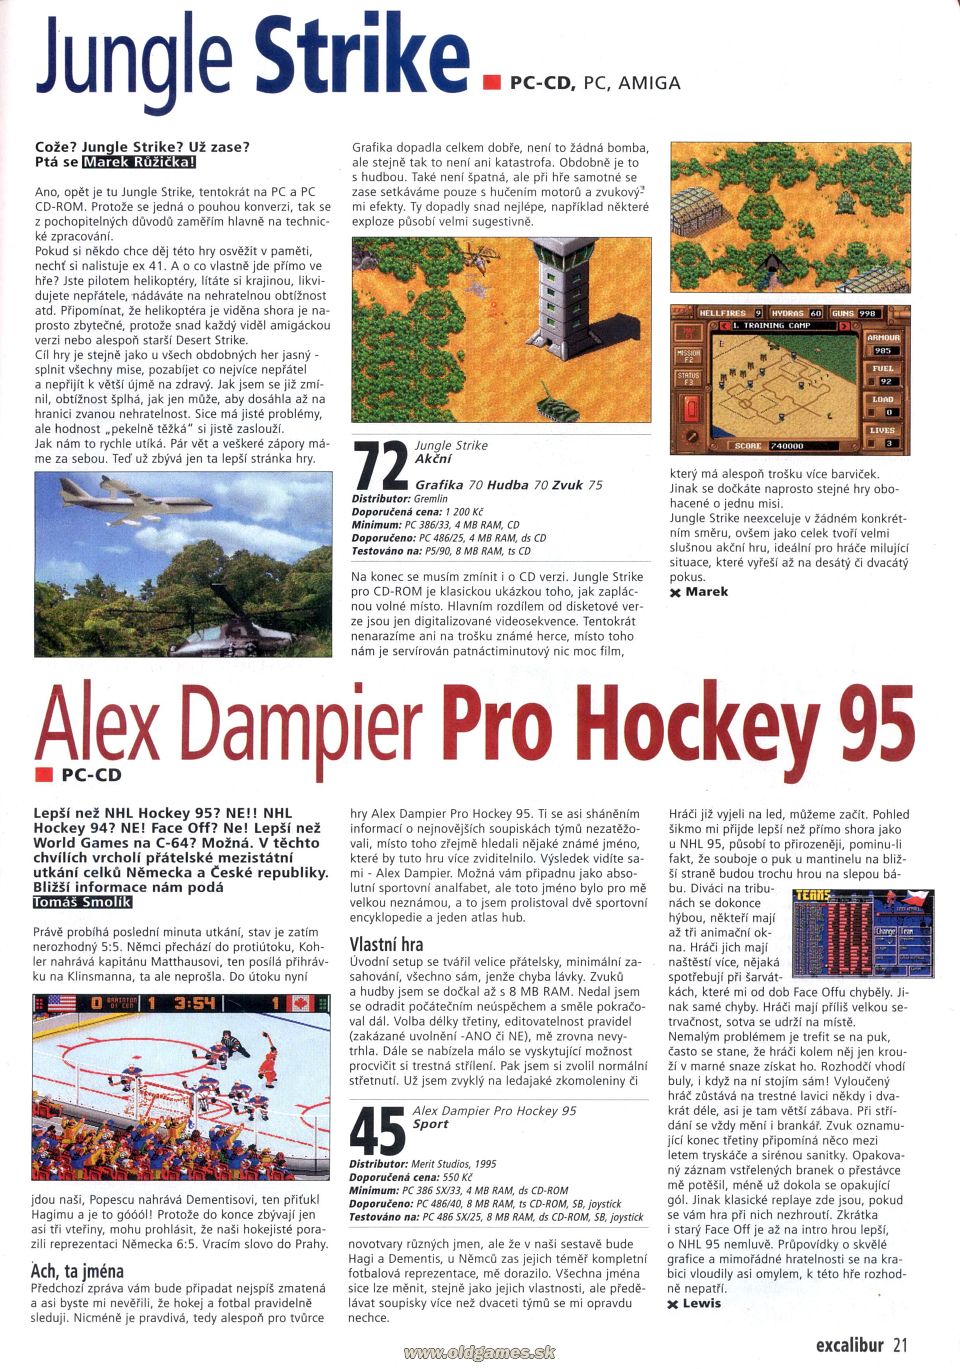 Jungle Strike, Alex Dampier Pro Hockey 95